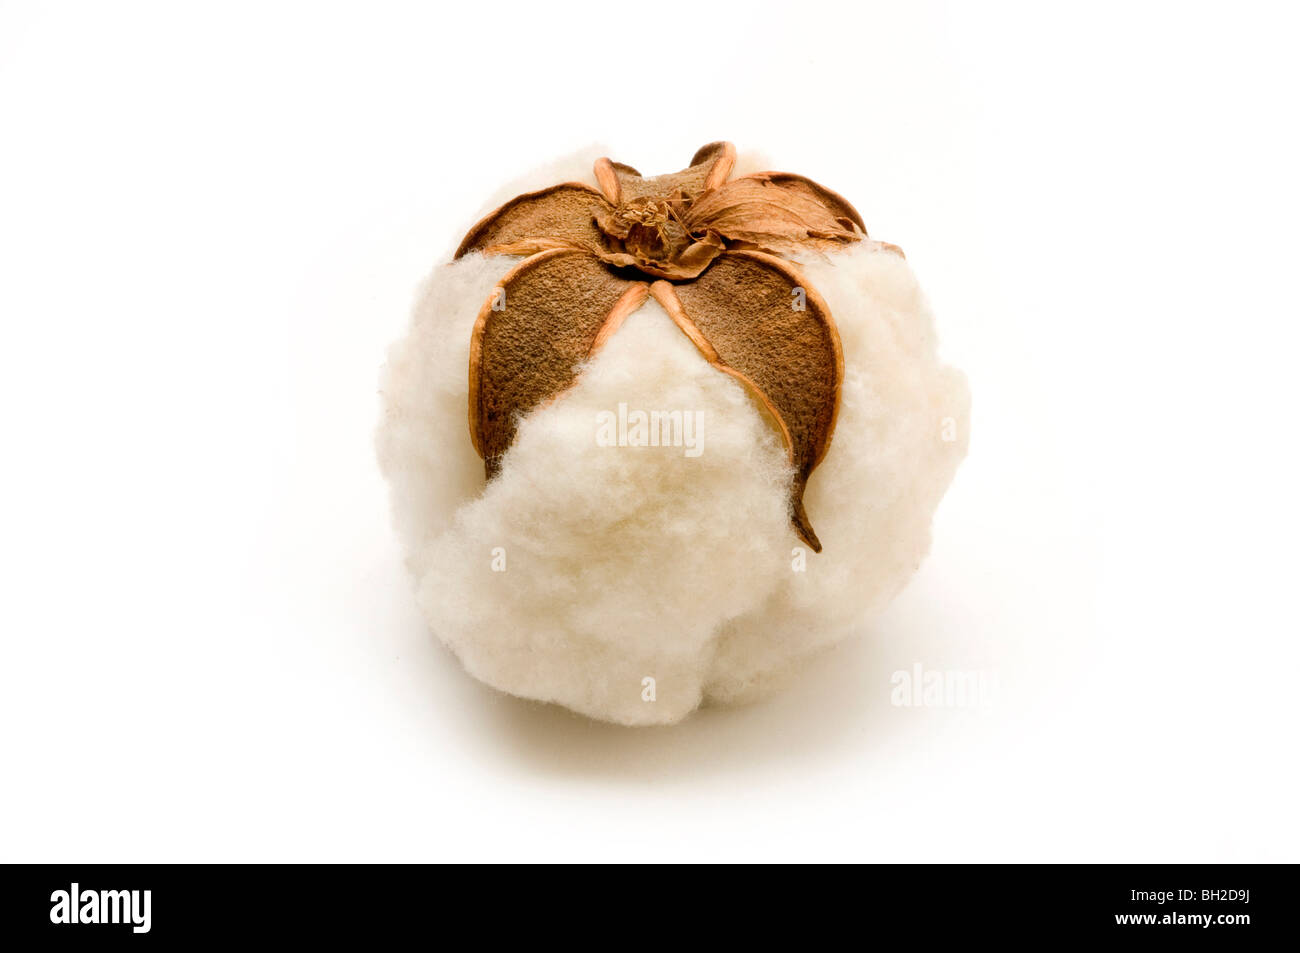 cotton ball natural Stock Photo